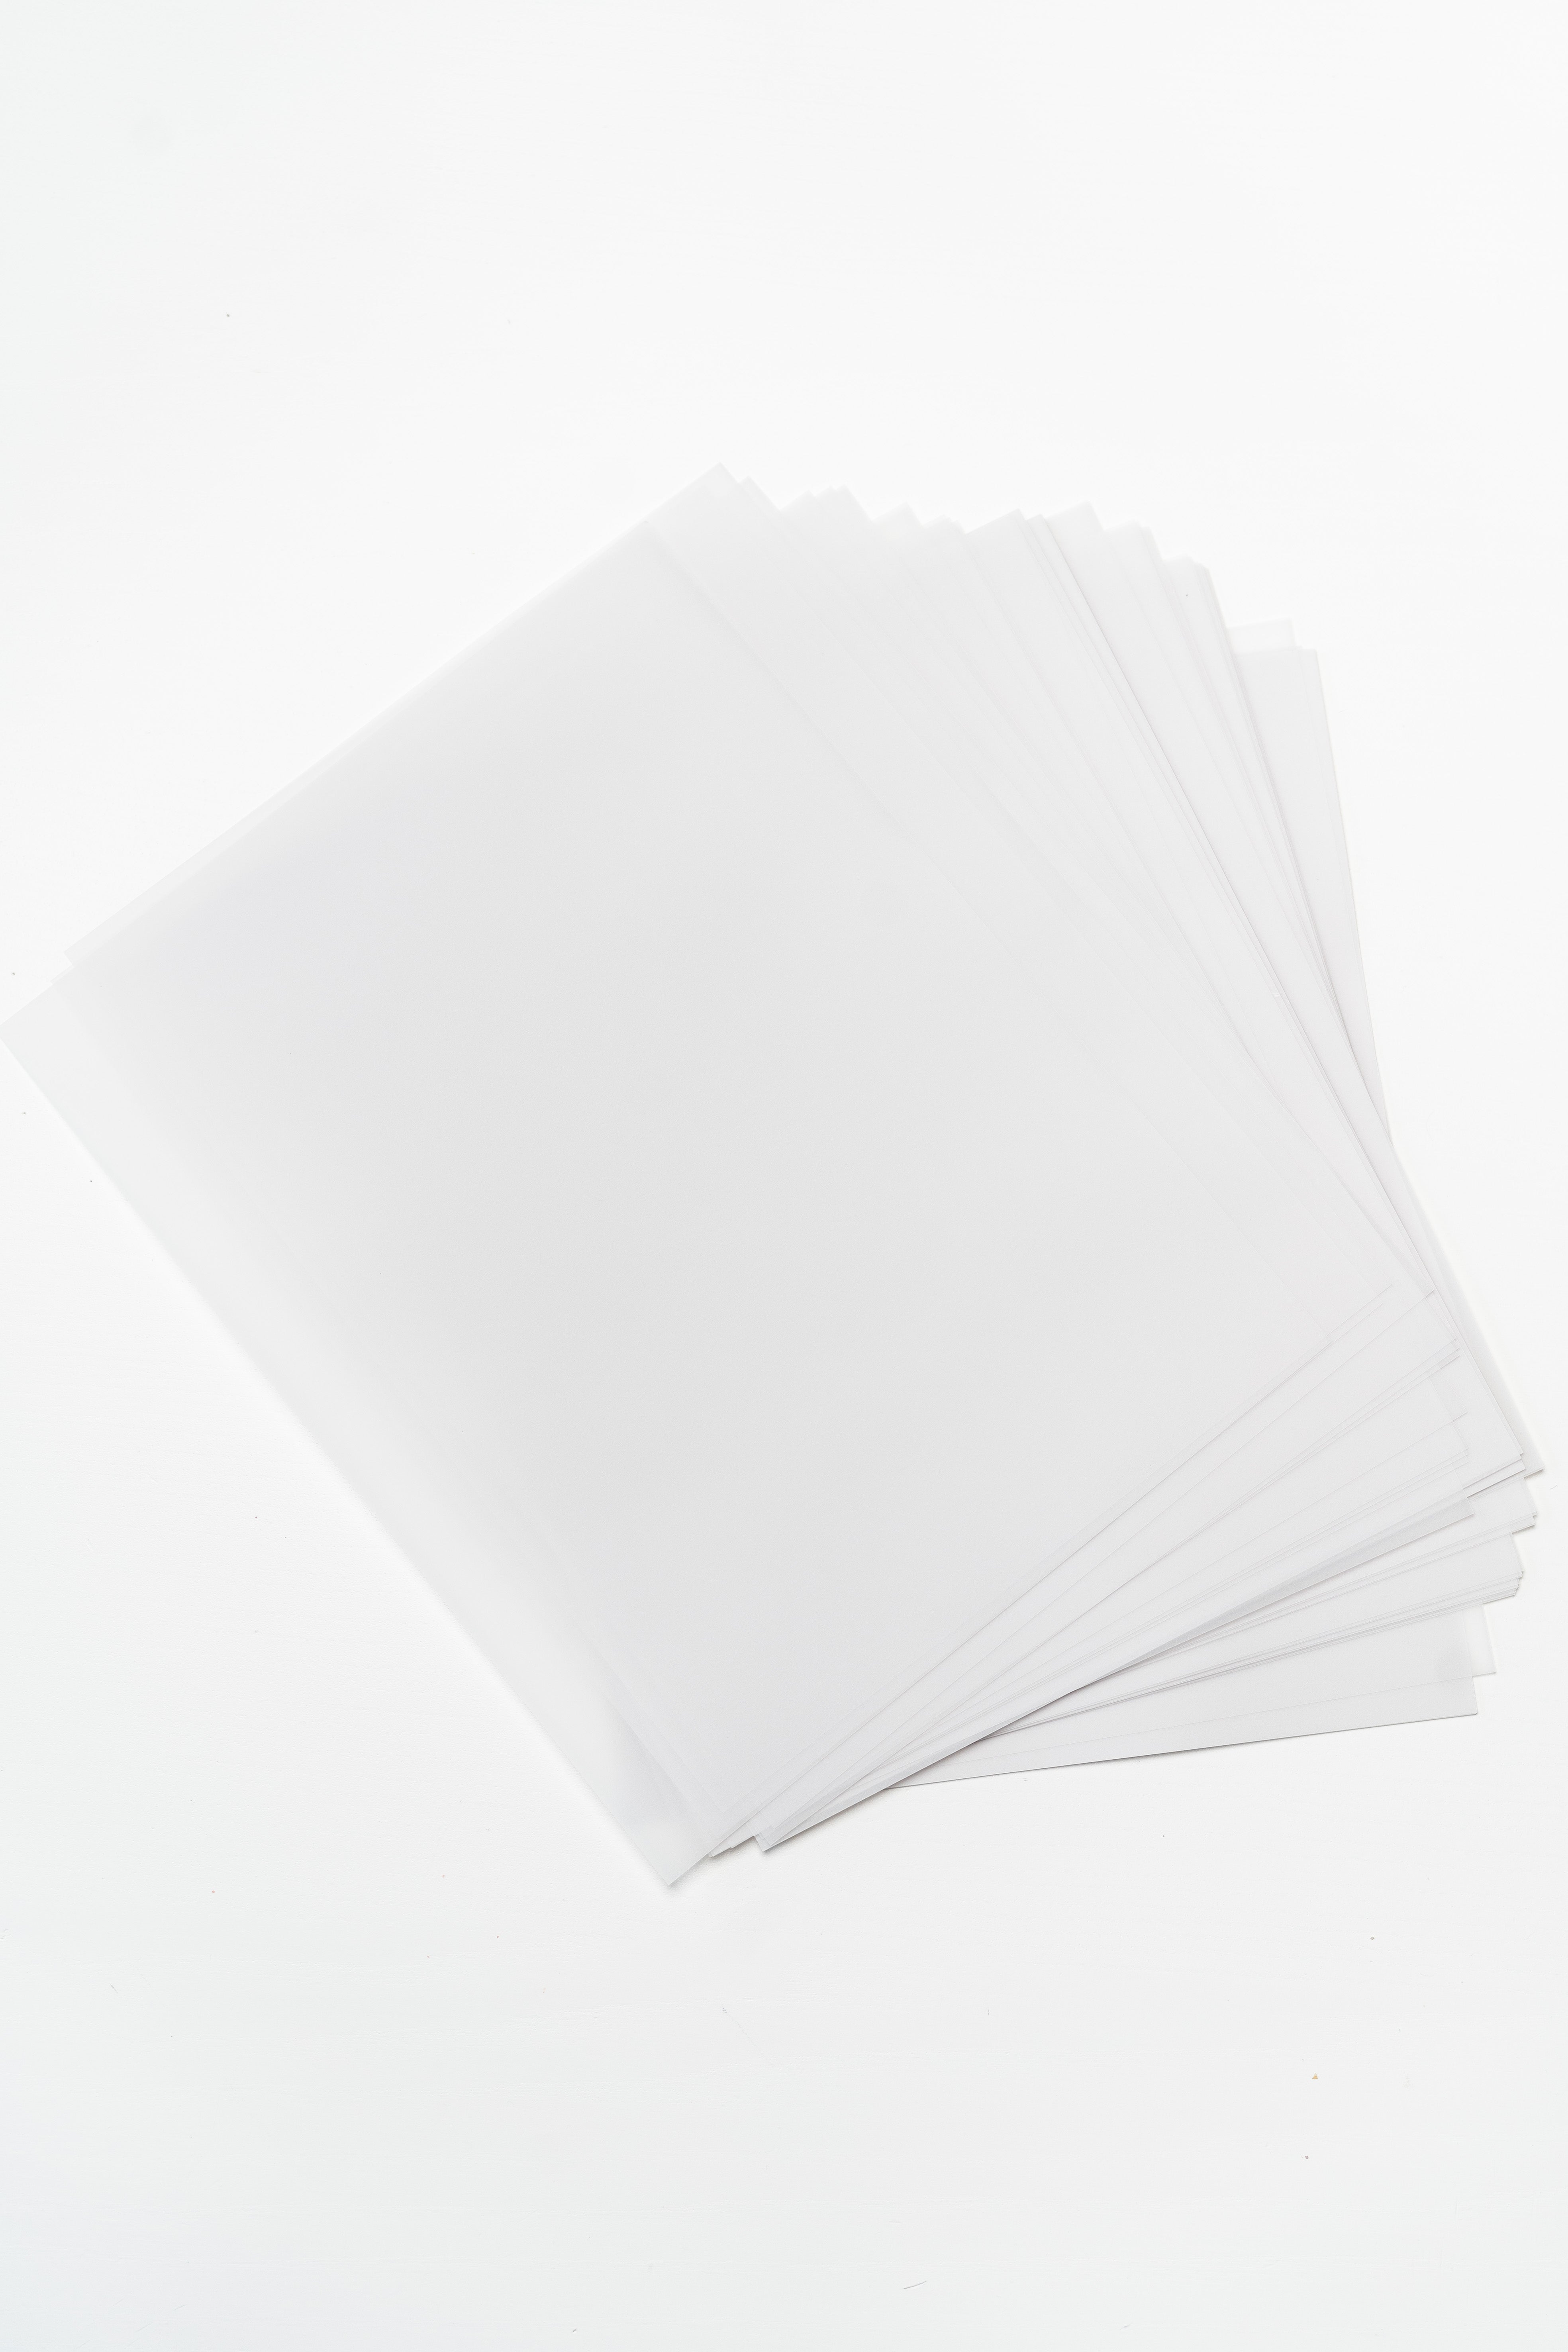 Vellum Sheets, 8.5x11, 4 sheets